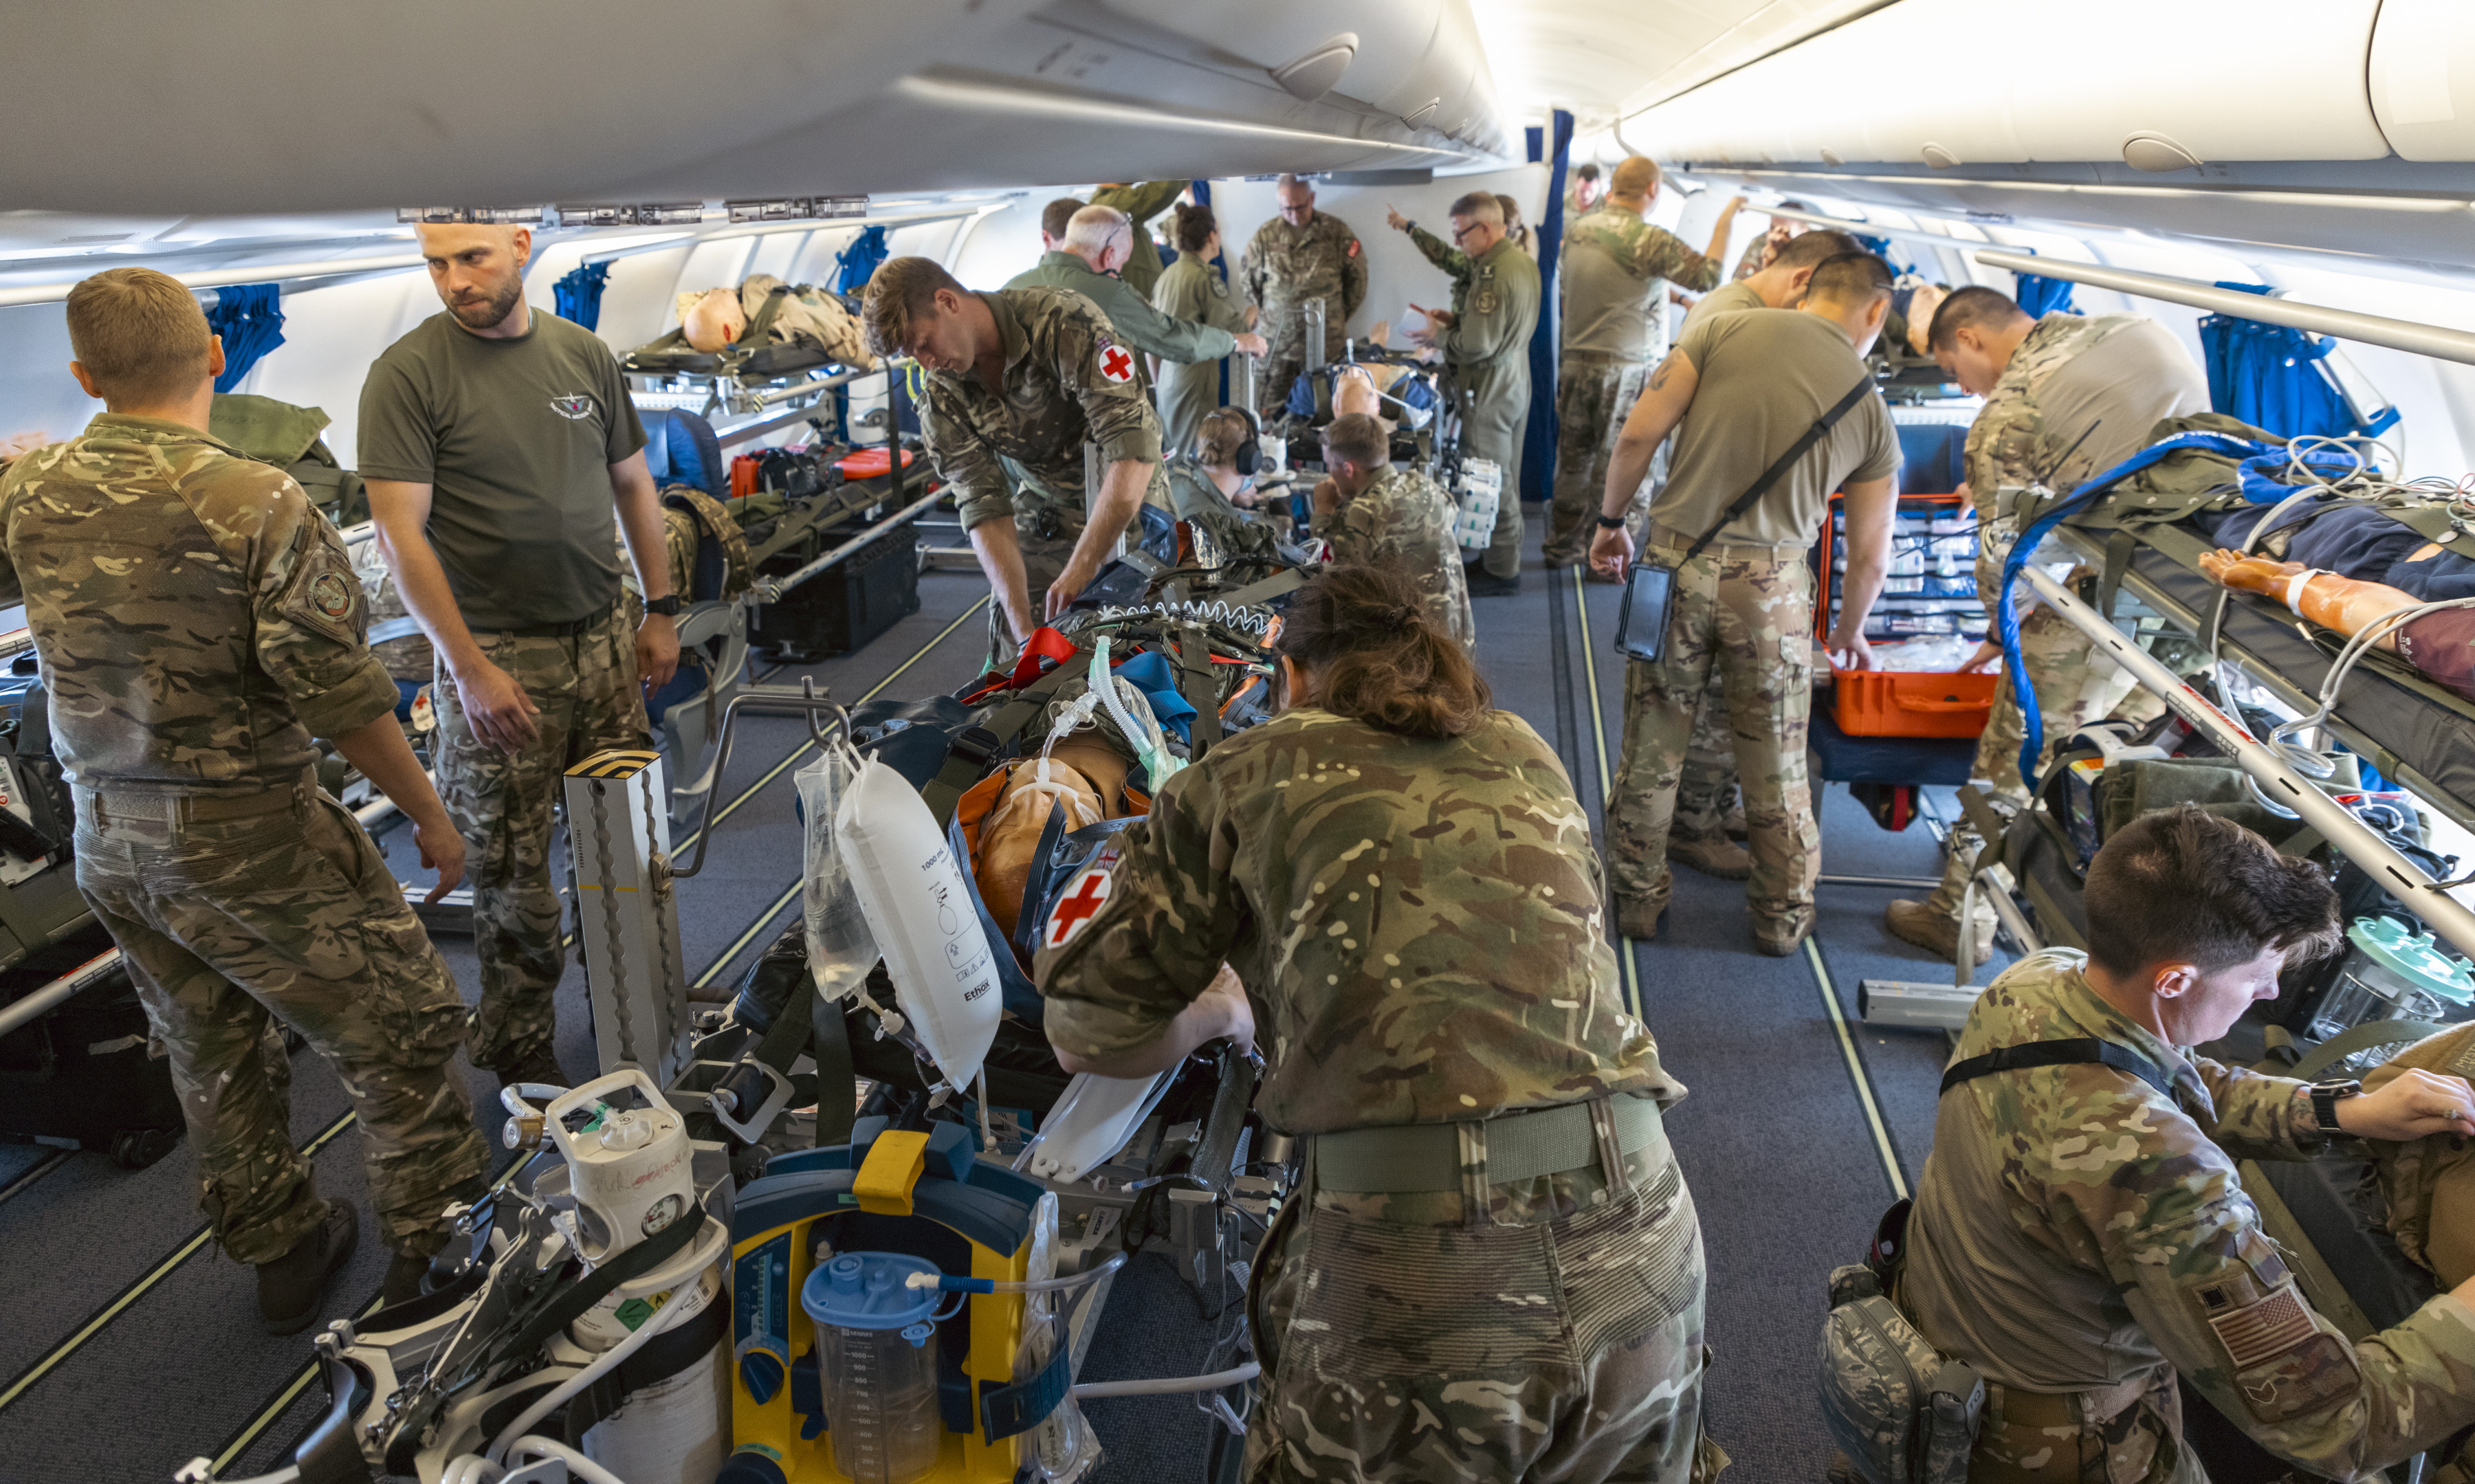 Tactical Medical Wing exercising medical scenarios onboard RAF Voyager